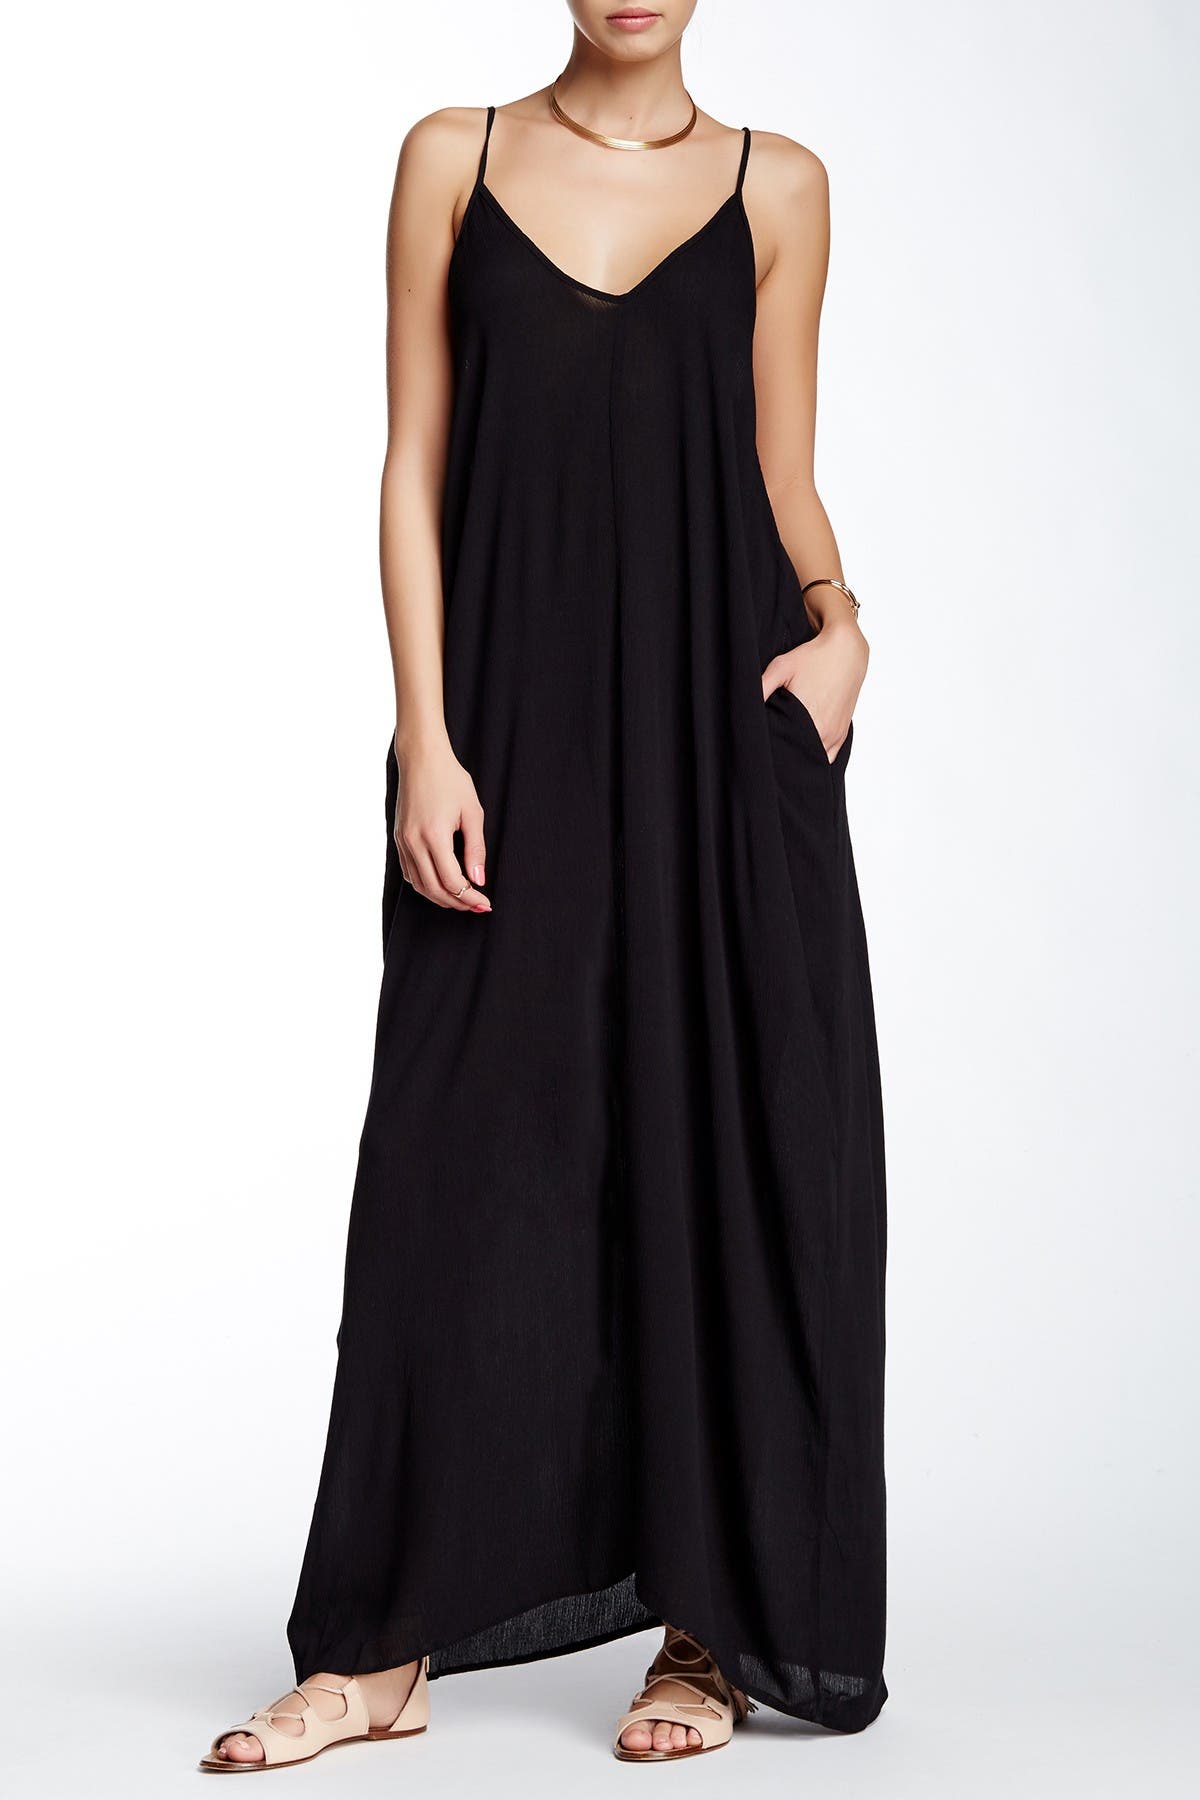 S-1X Mocha Xclusive Collection New Womens Plus Size Plain Long Jersey Scoop Neck Maxi Dress 